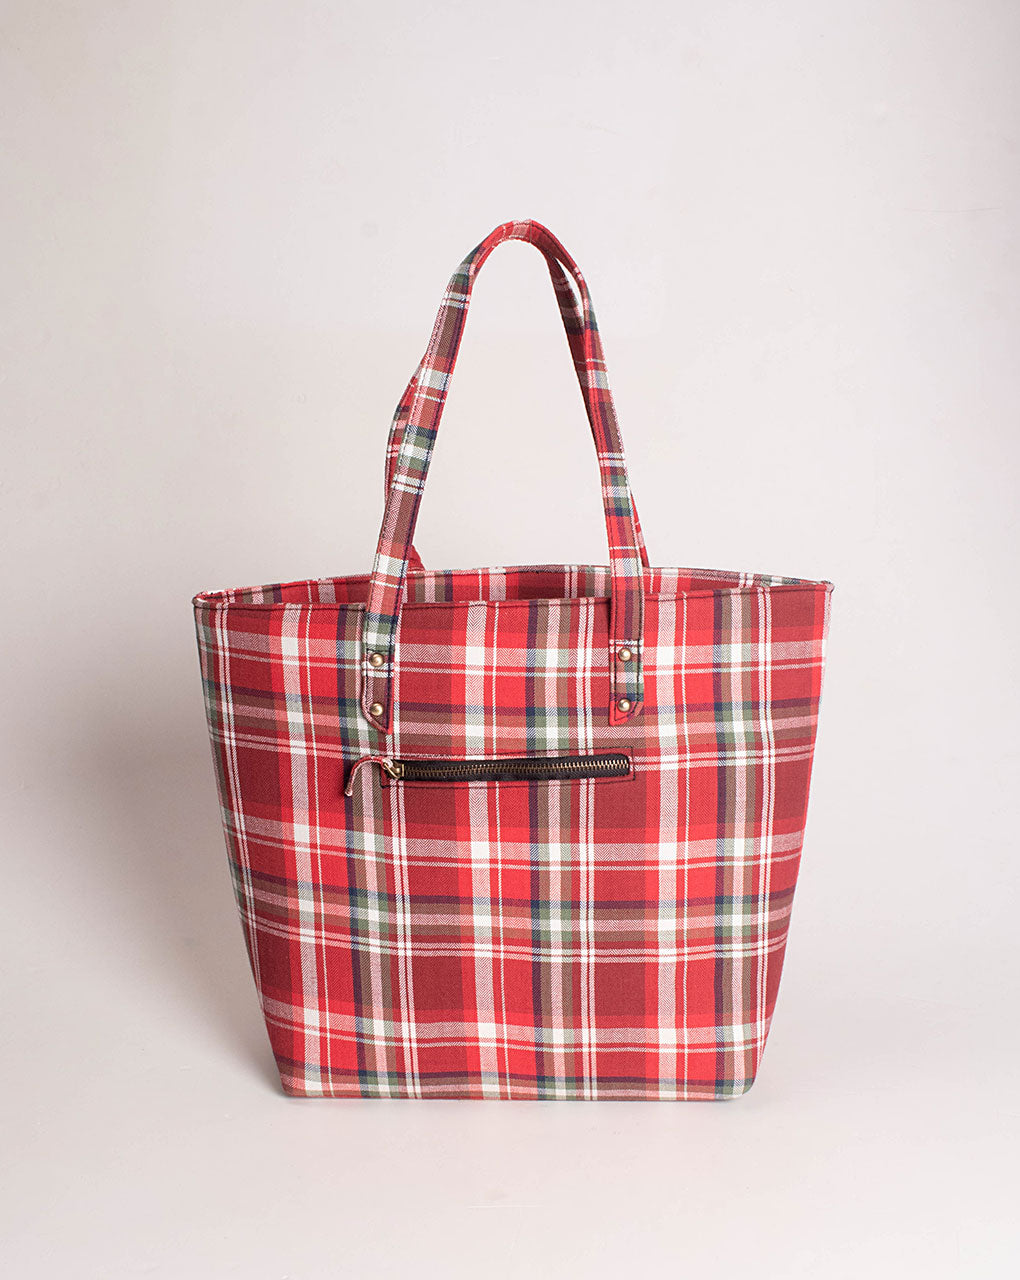 How to Make a Fashionable Denim Bag - DIY & Crafts